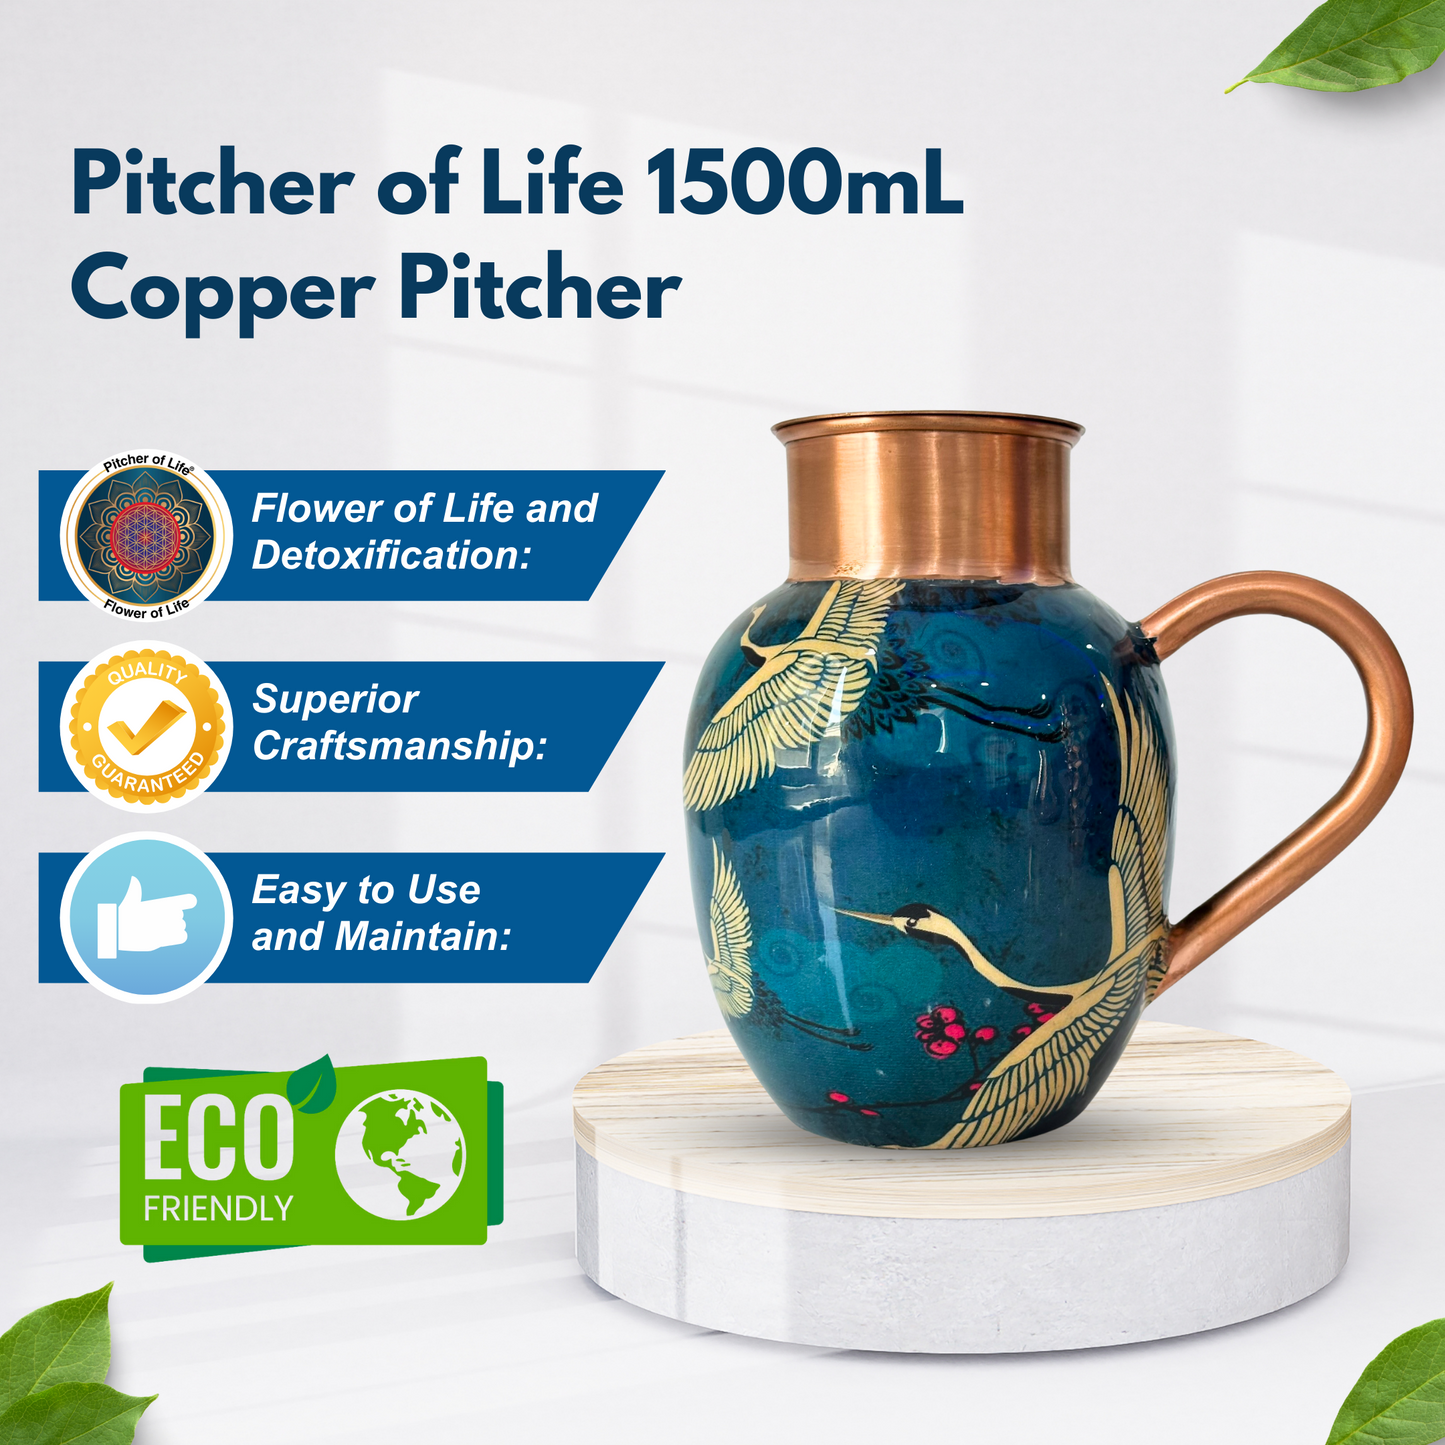 Pitcher of Life 1500mL Copper Pitcher - White Birds Design